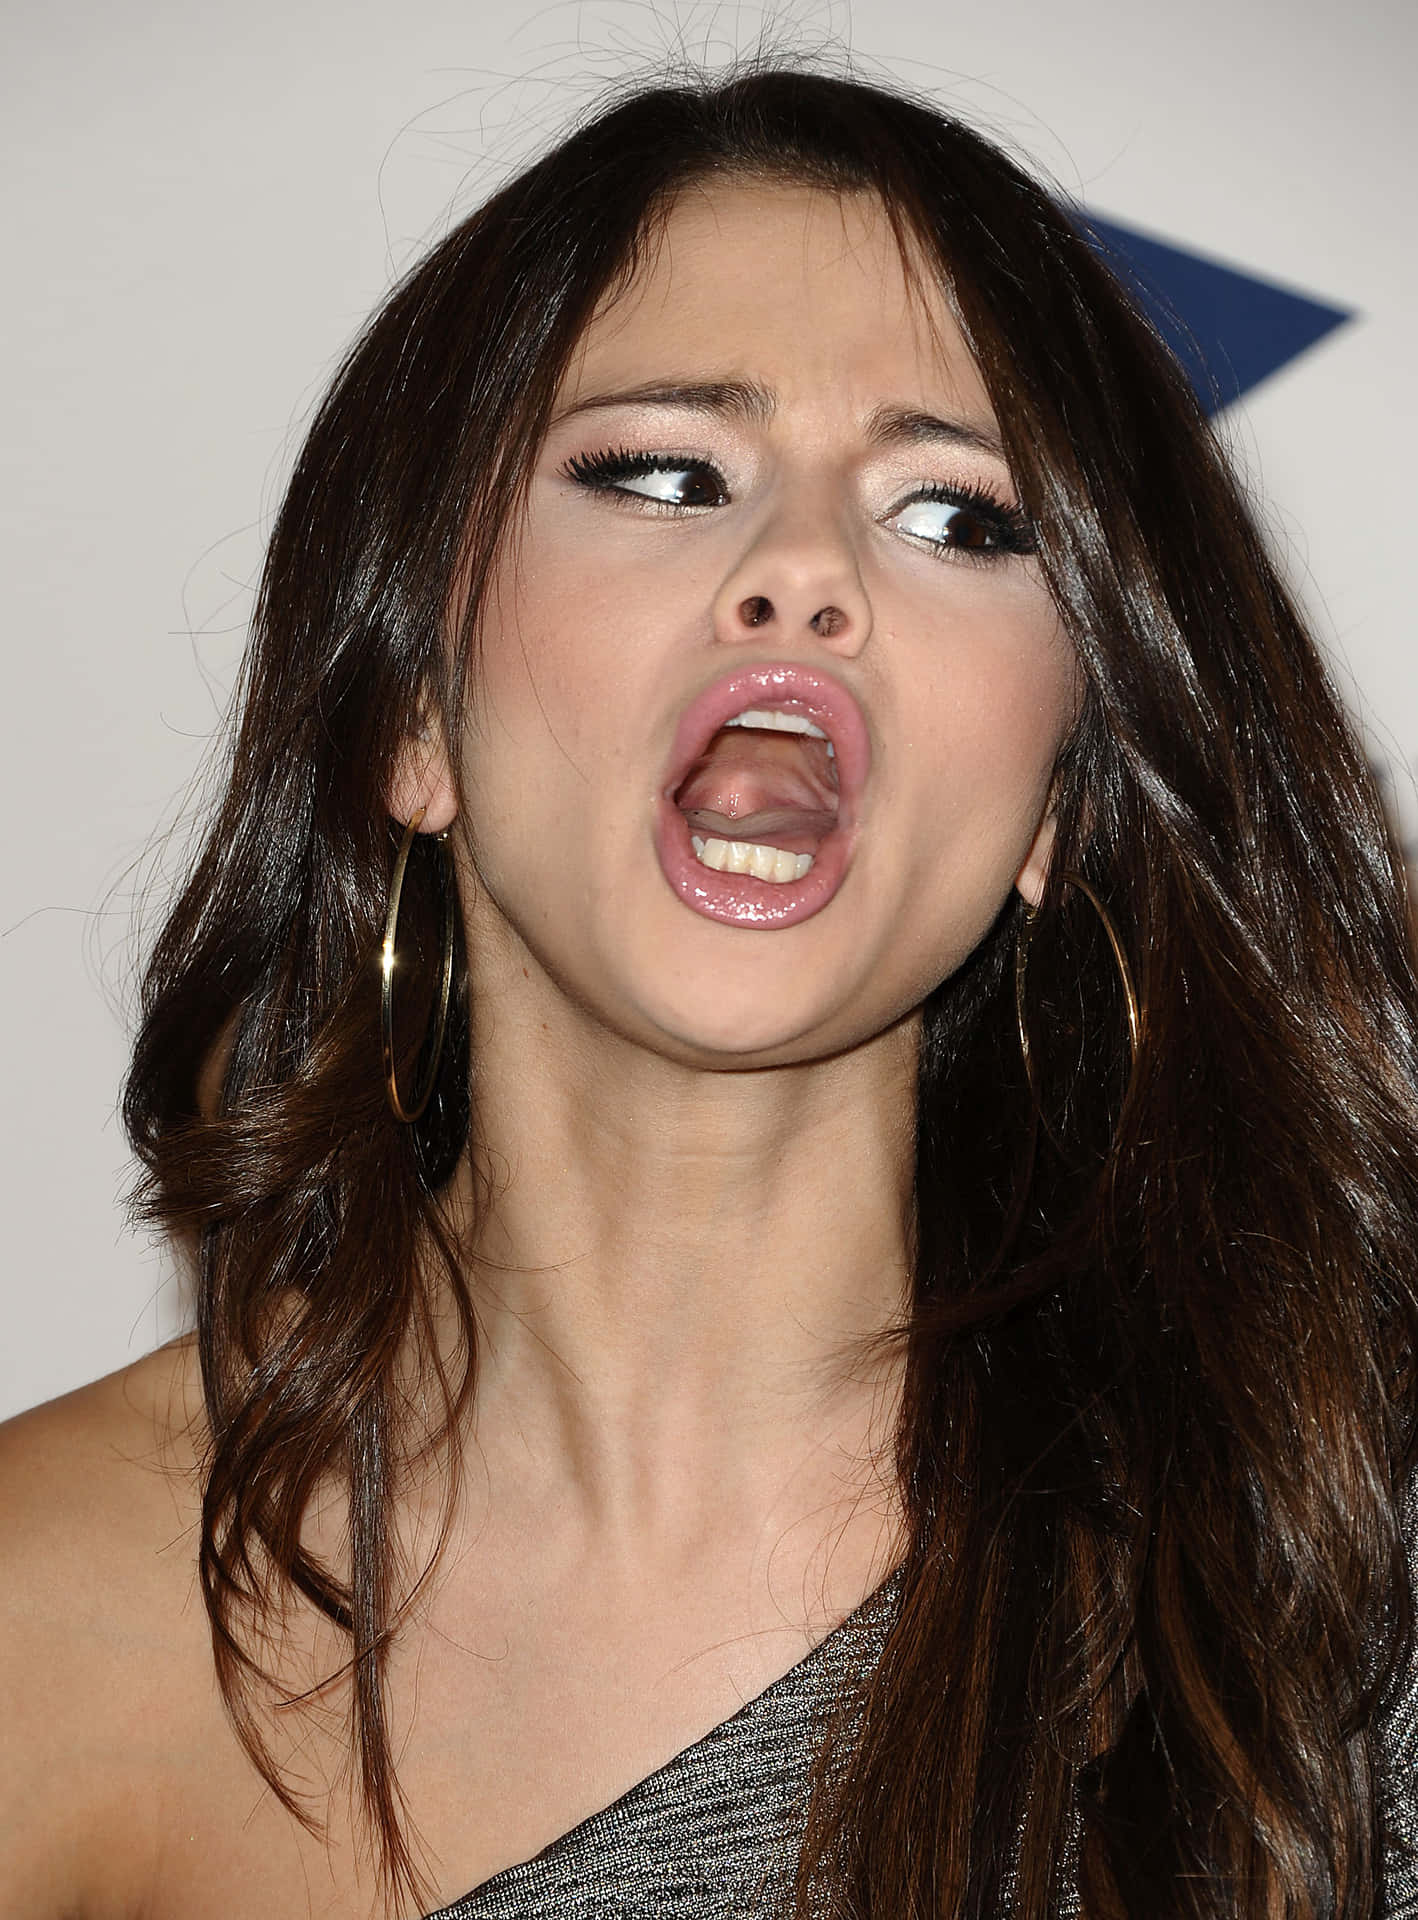 Imágenesgraciosas De La Famosa Selena Gomez